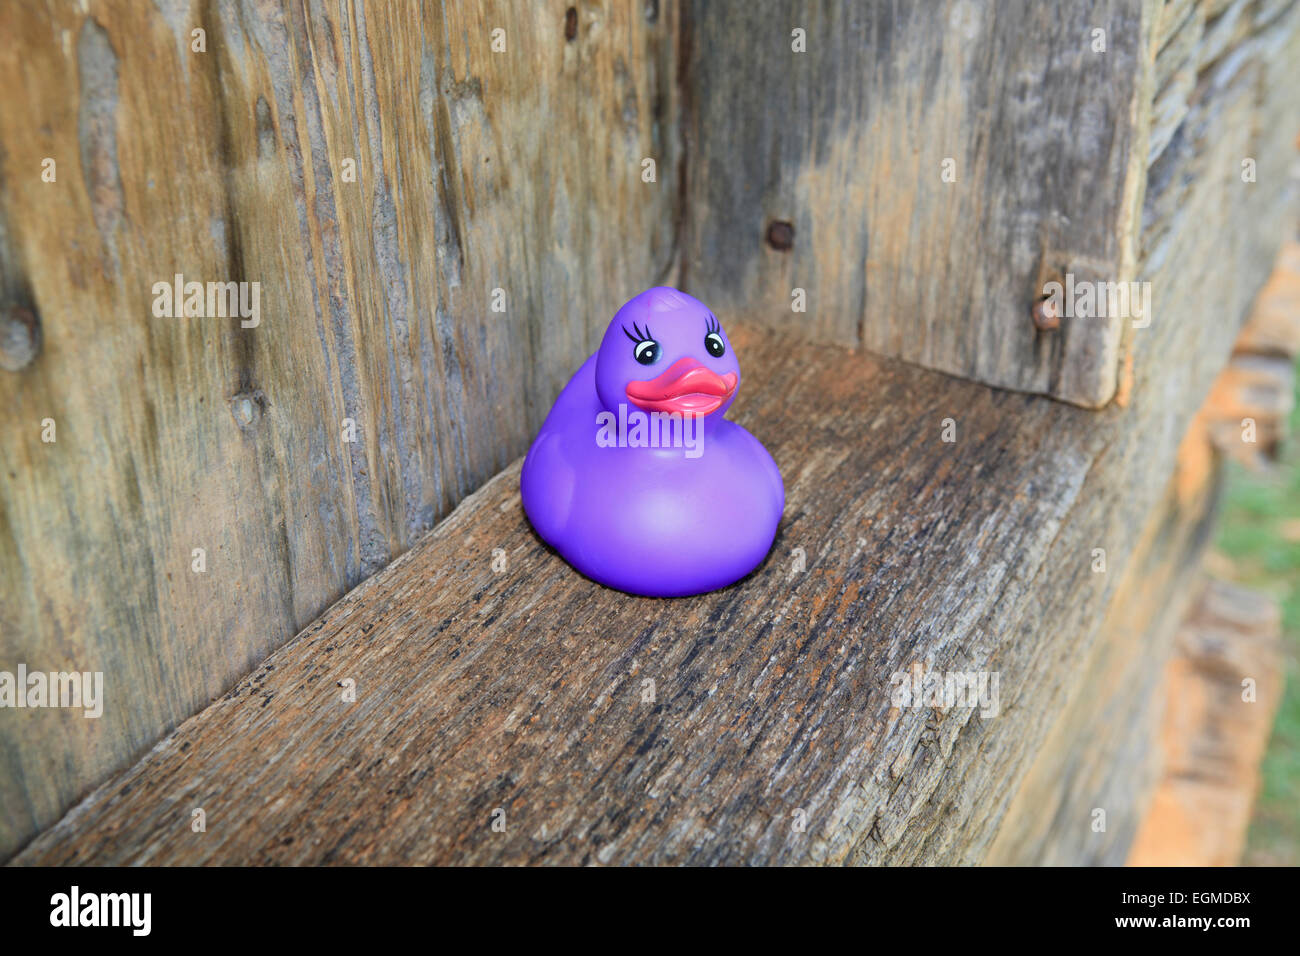 Purple rubber duck on a ledge. Stock Photo